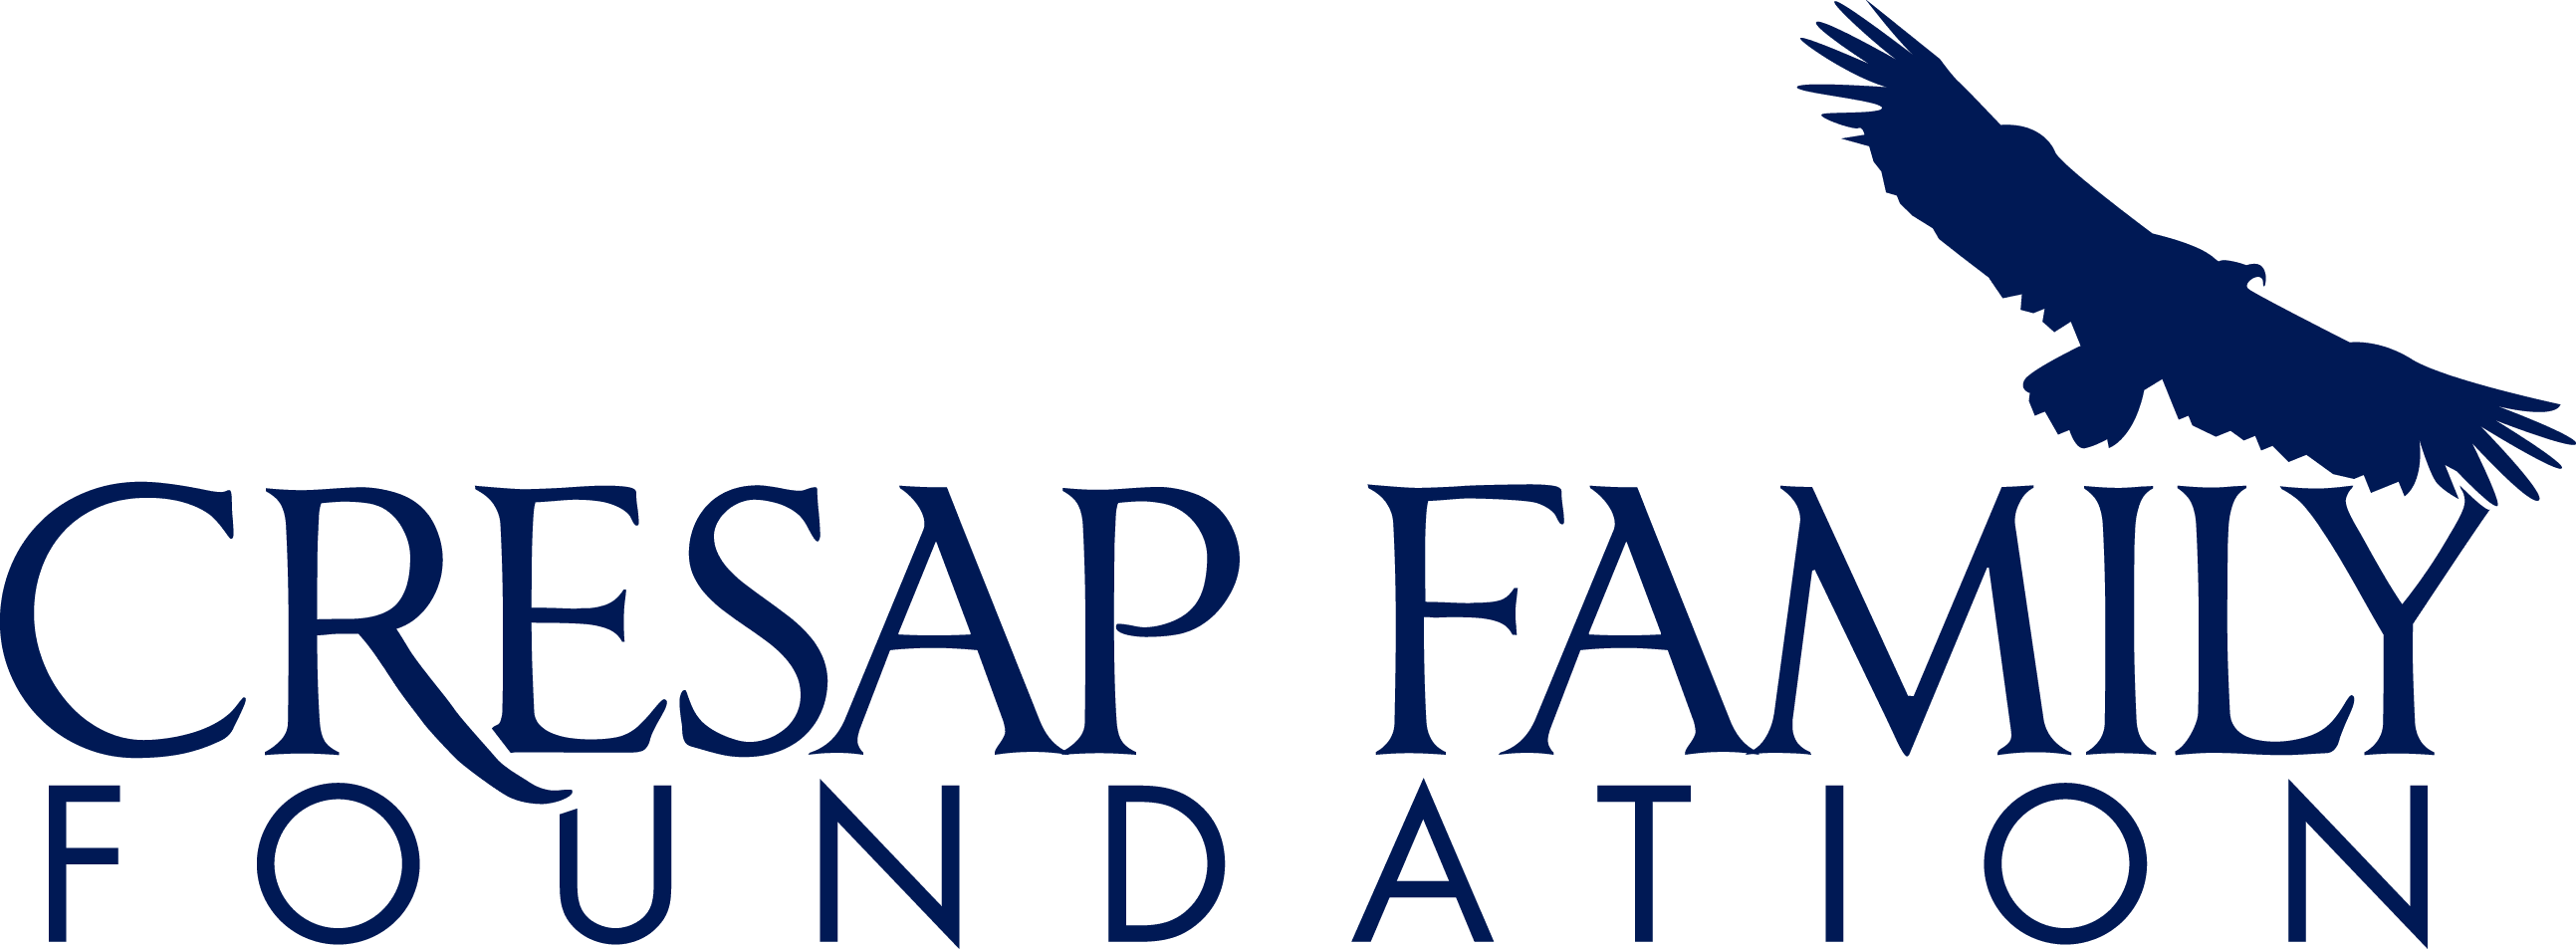 Cresap Family Foundation